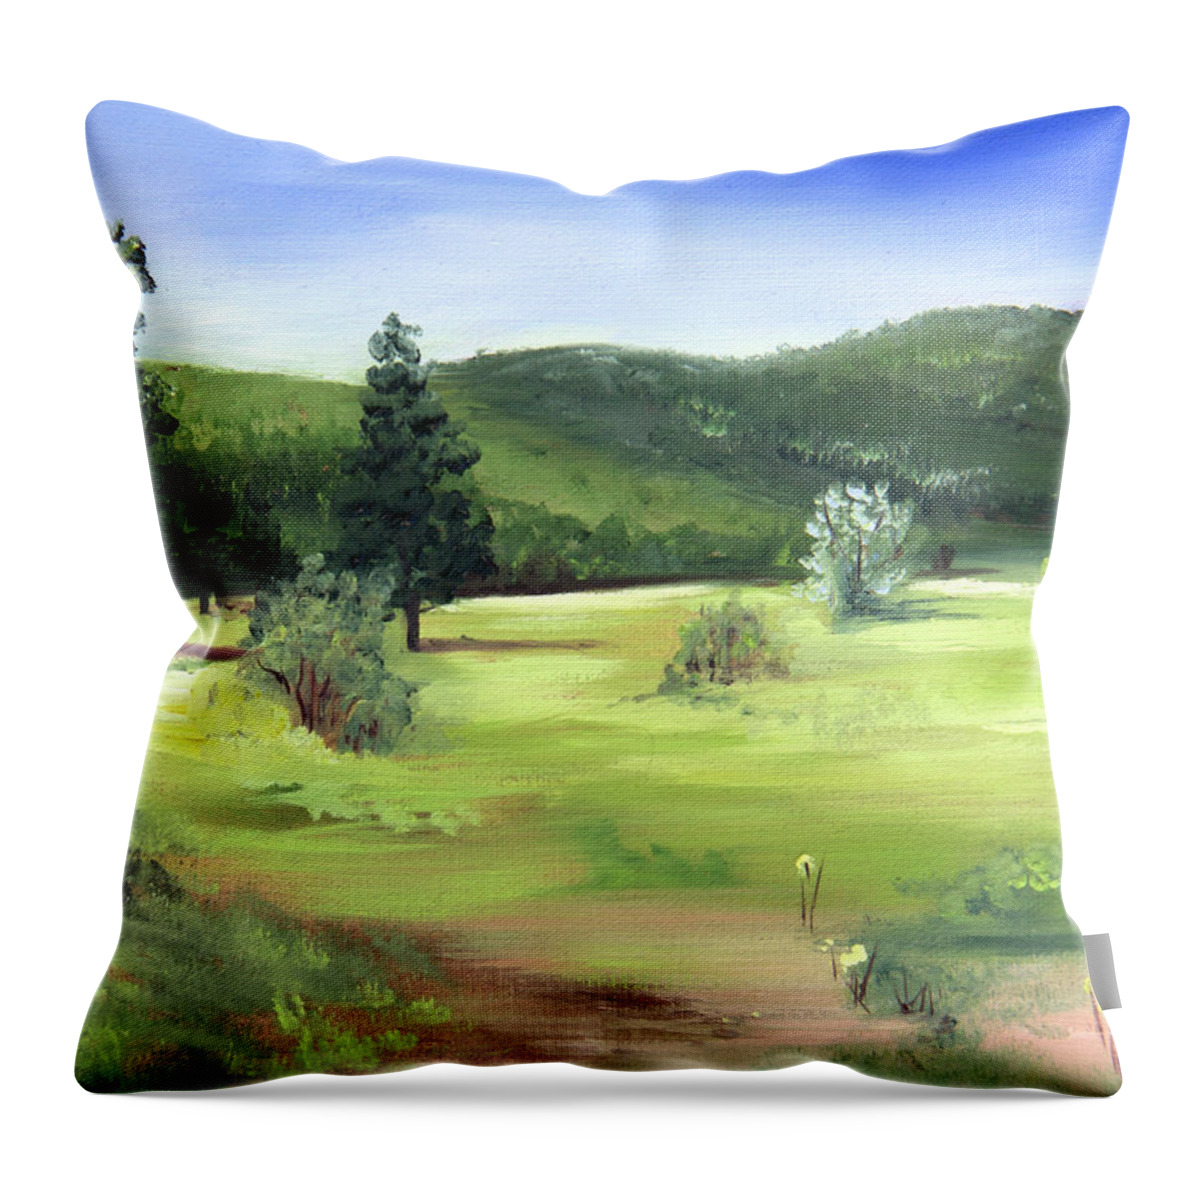 Sunlit Mountain Meadow Throw Pillow featuring the painting Sunlit Mountain Meadow by Nila Jane Autry